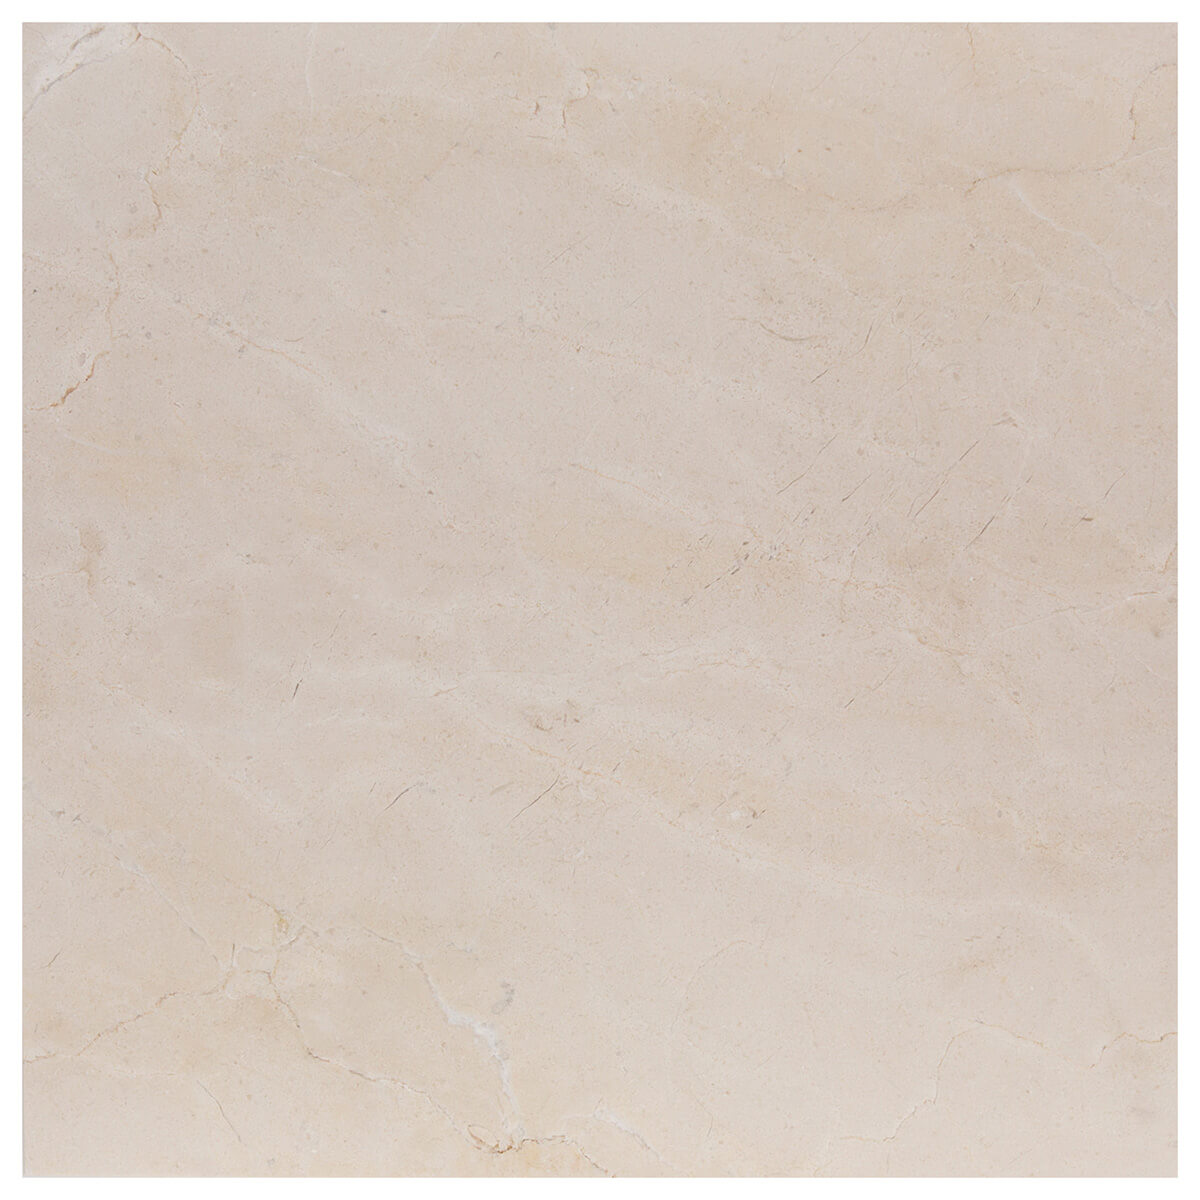 haussmann crema marfil limestone square natural stone field tile 18x18 honed